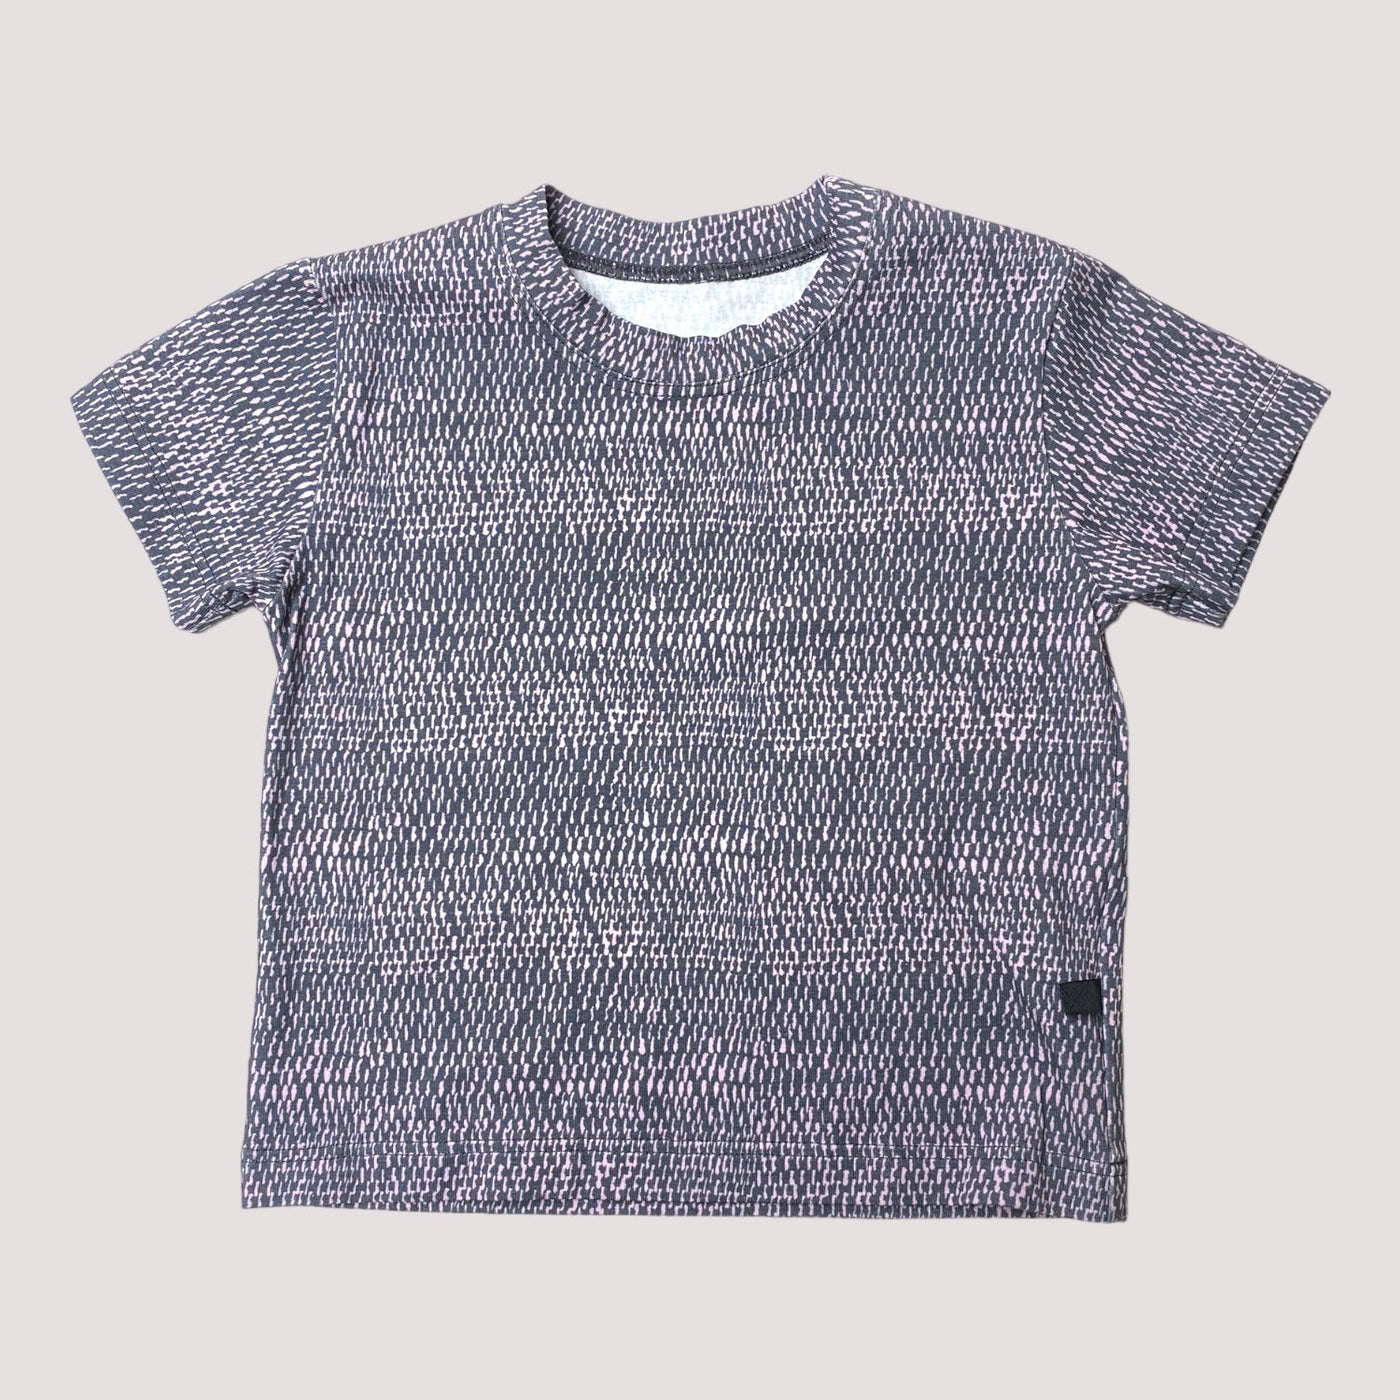 Vimma t-shirt, pink/grey | 80cm